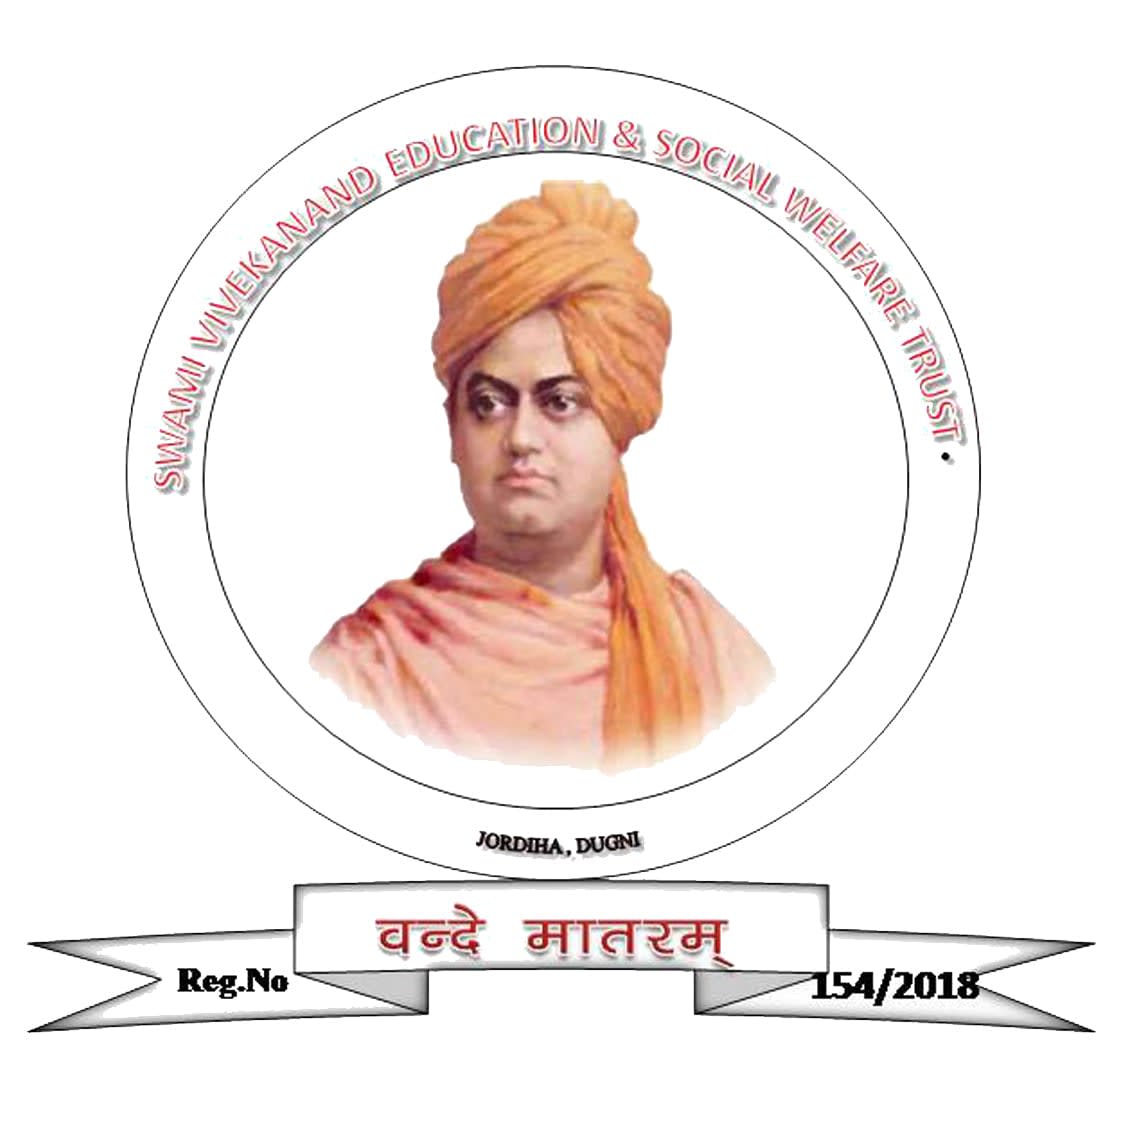 Swami Vivekanand Education & Social Welfare Trust